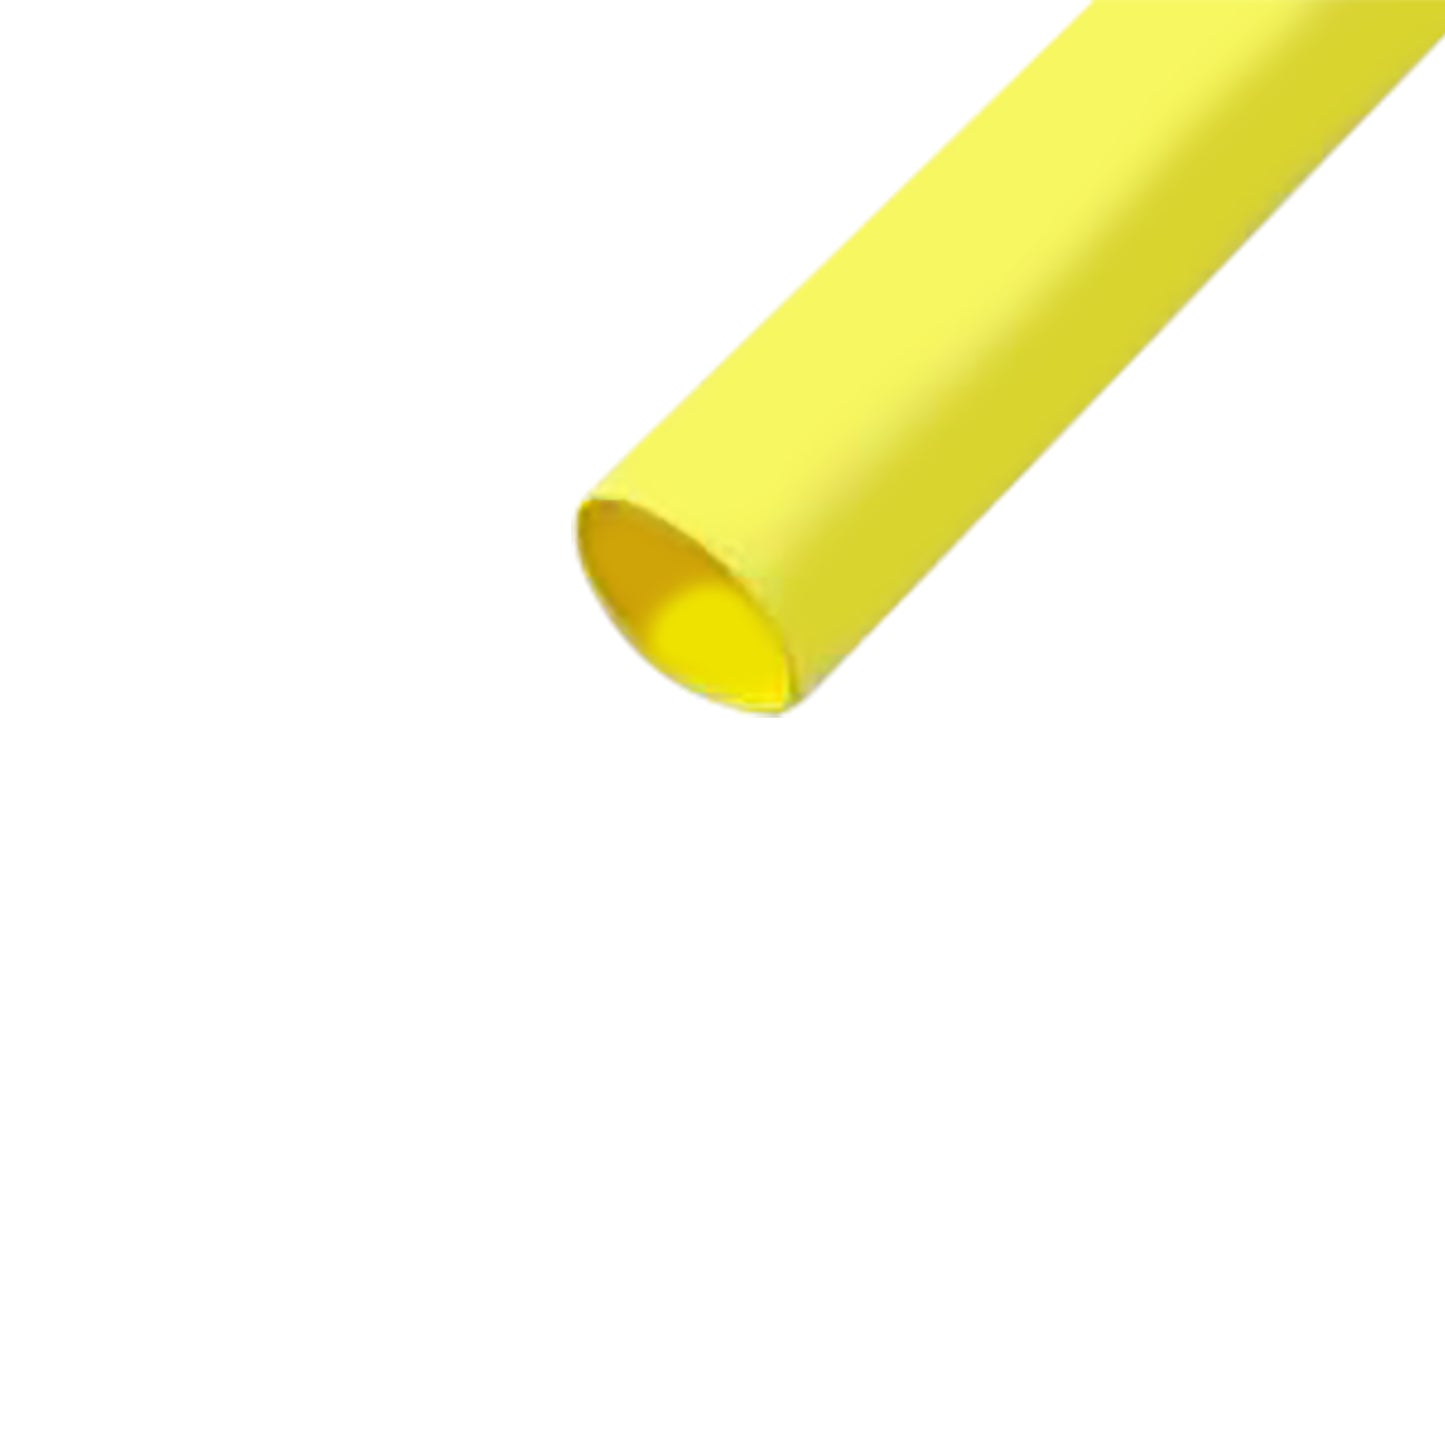 Flexible Thin Single Wall Non-Adhesive Heat Shrink Tubing 2:1 Yellow 3/8" ID - 48" Inch 4 Pack